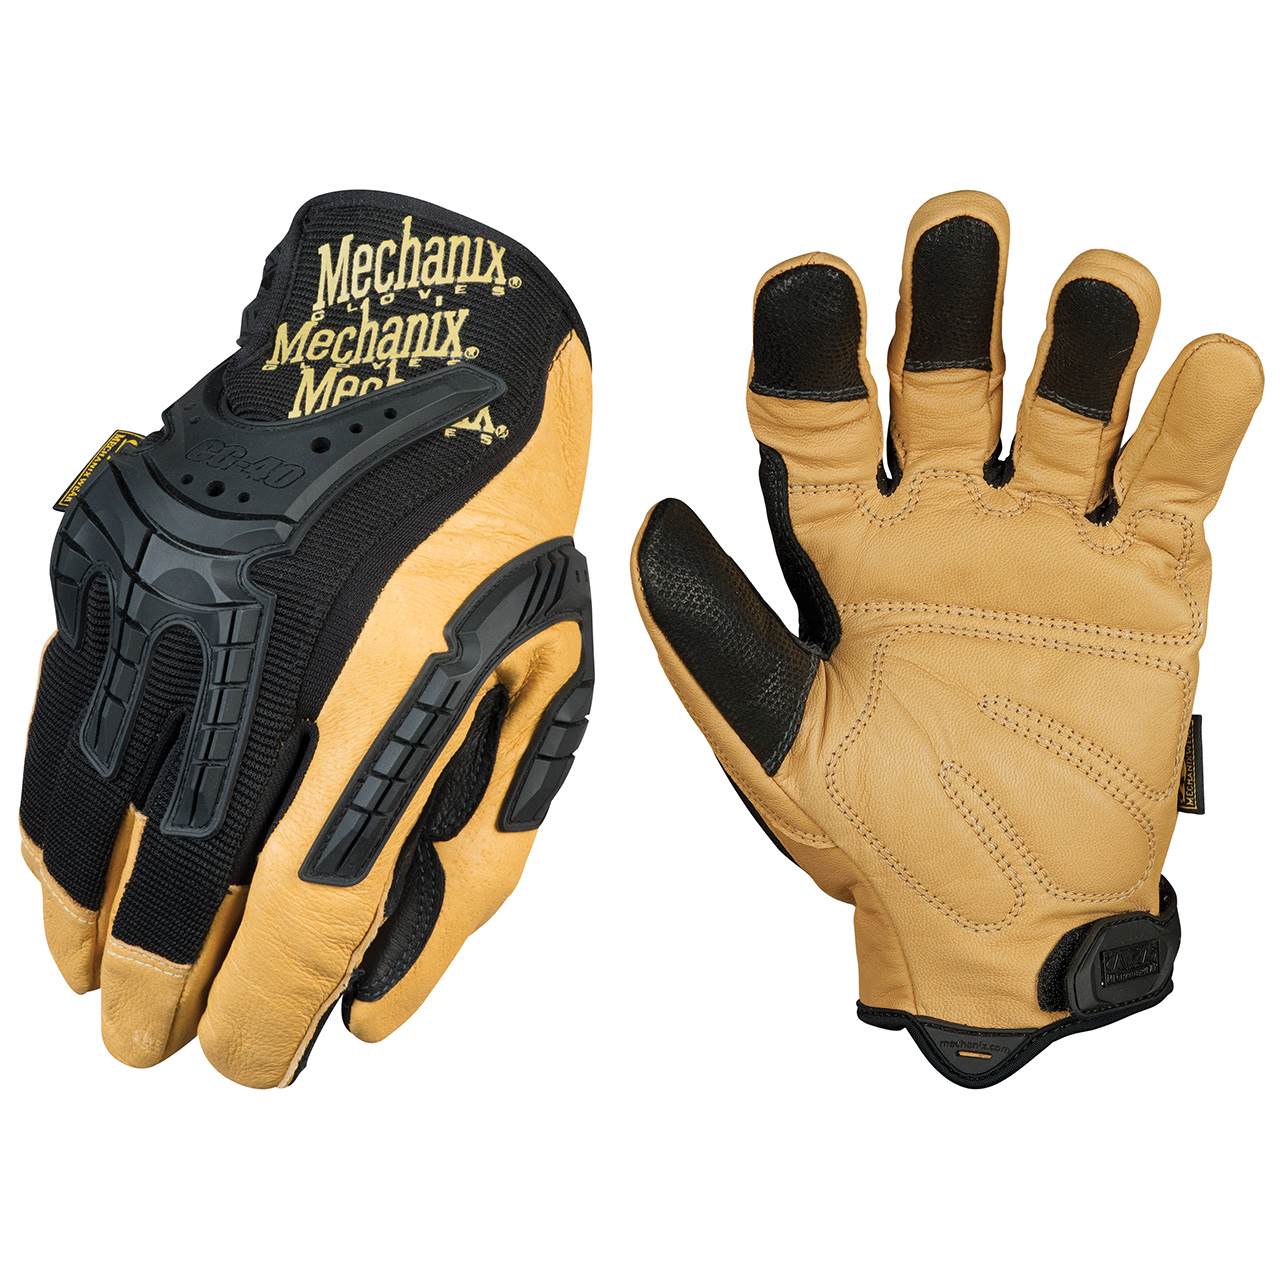 https://cdn11.bigcommerce.com/s-4s9liwcv/images/stencil/original/products/385630/484854/CG40-75-Mechanix-Wear-CG-Heavy-Duty-Leather-Work-Gloves-pic1__03515.1612553053.jpg?c=2&imbypass=on&imbypass=on